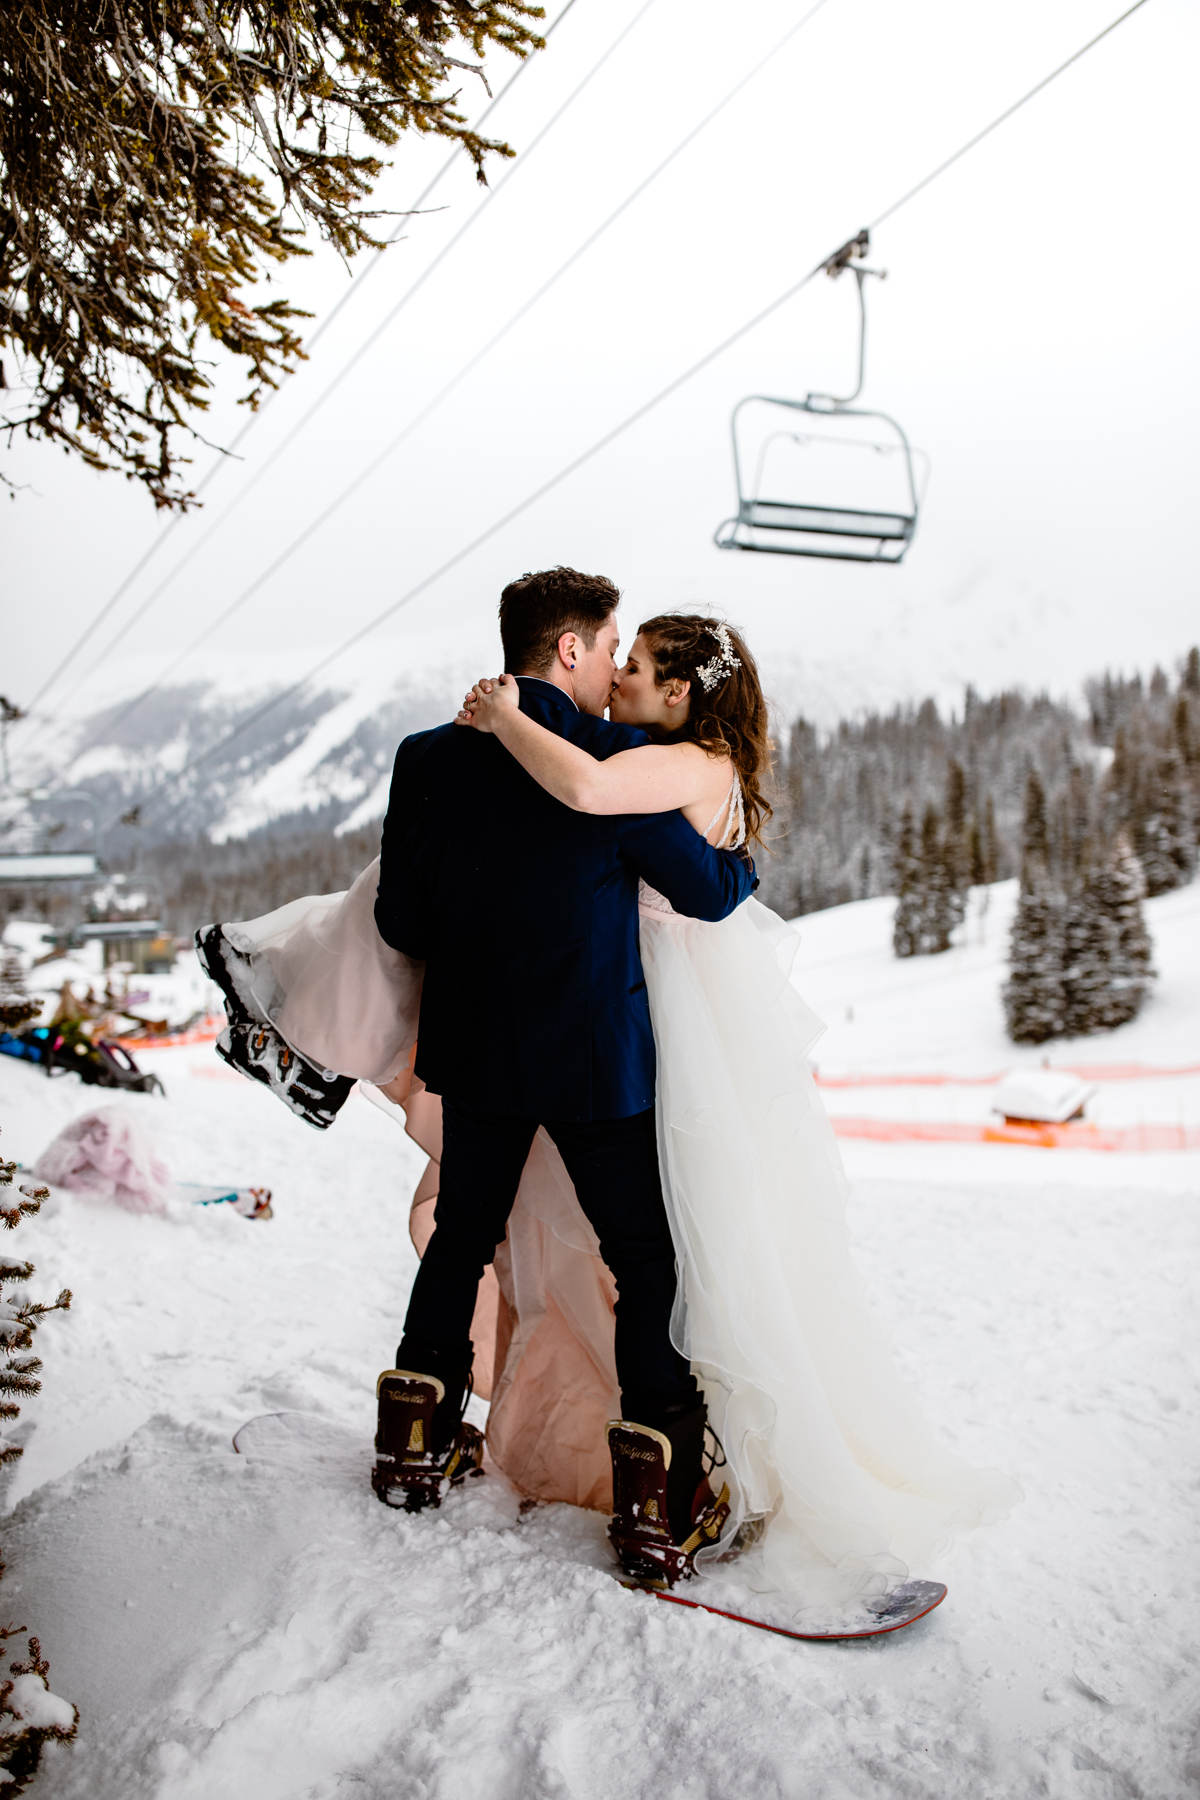 Ski Wedding Photos at Sunshine Village in Banff - Image 39